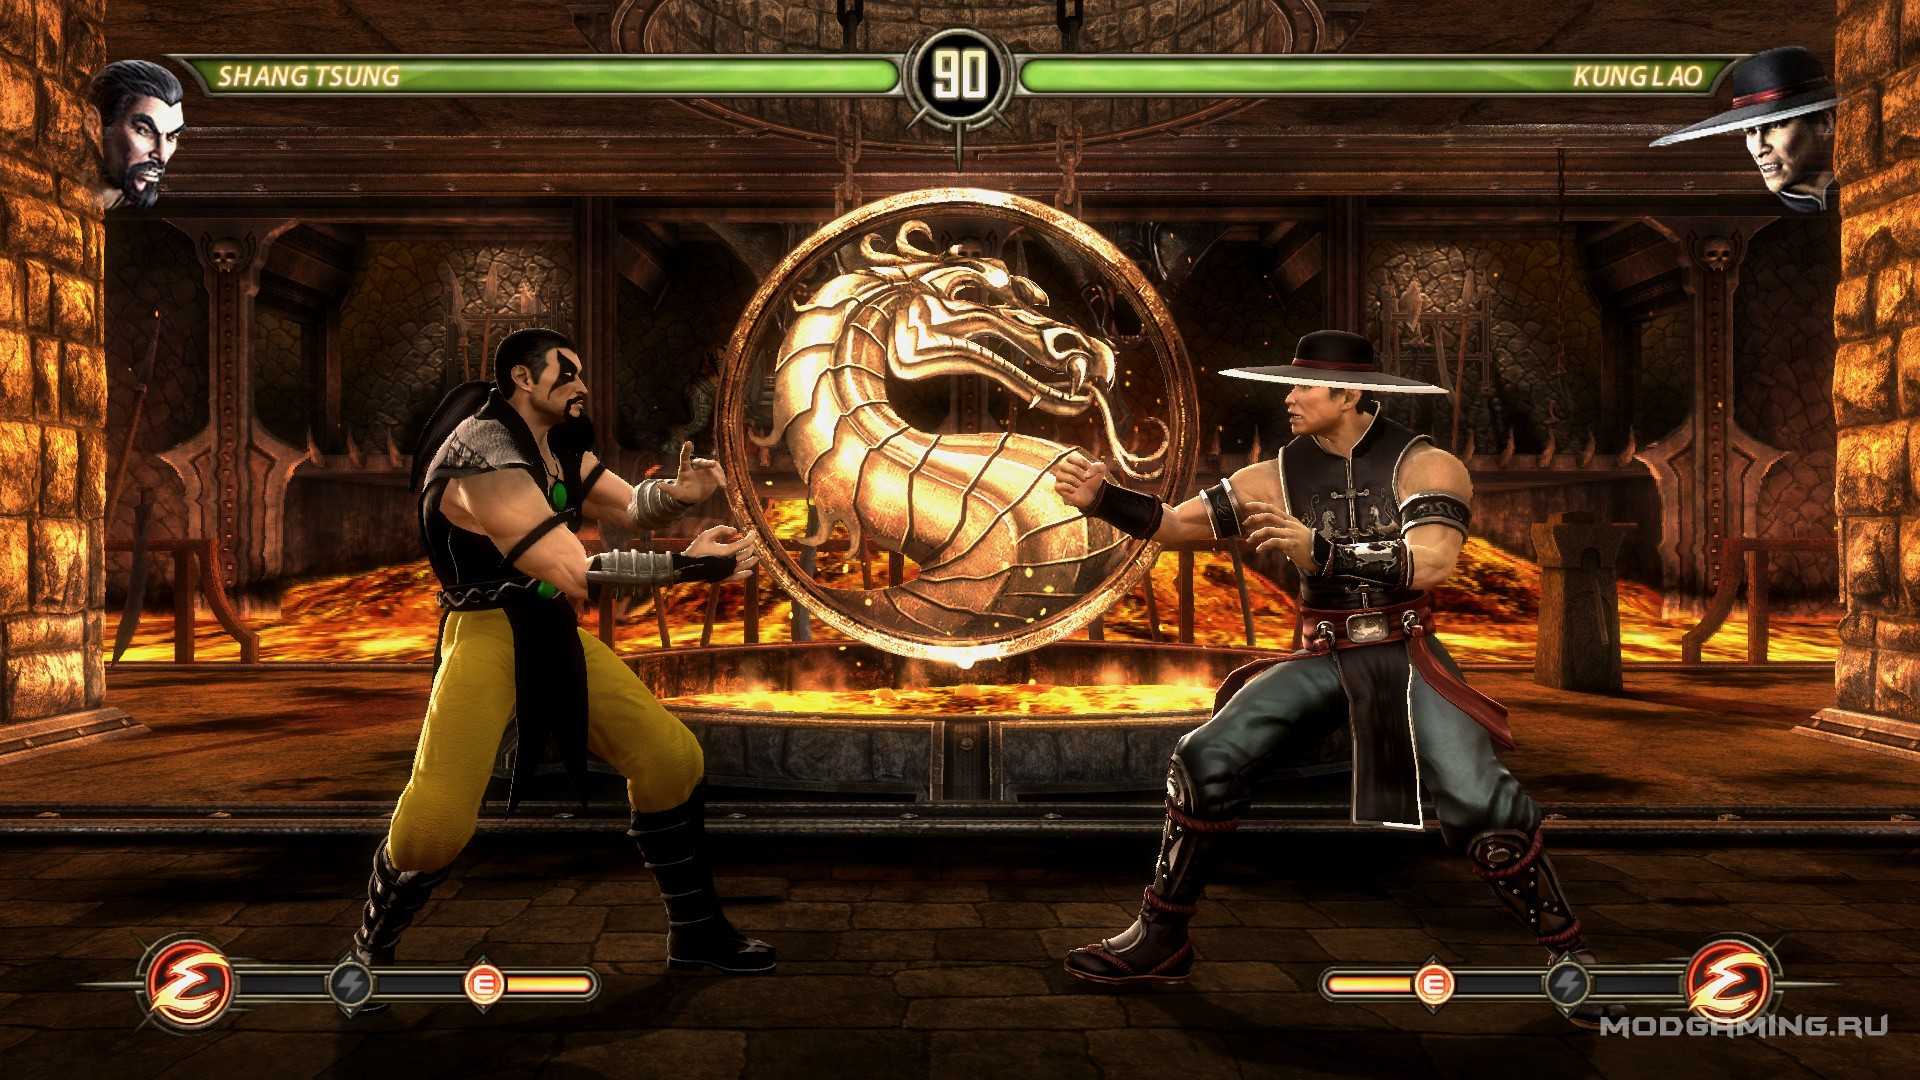 Мортал комбат на консоли. Шанг Цунг мортал комбат 3. Игра мортал комбат игра мортал комбат. Mortal Mortal Kombat 3 Shang Tsung. Mortal Kombat 2002.